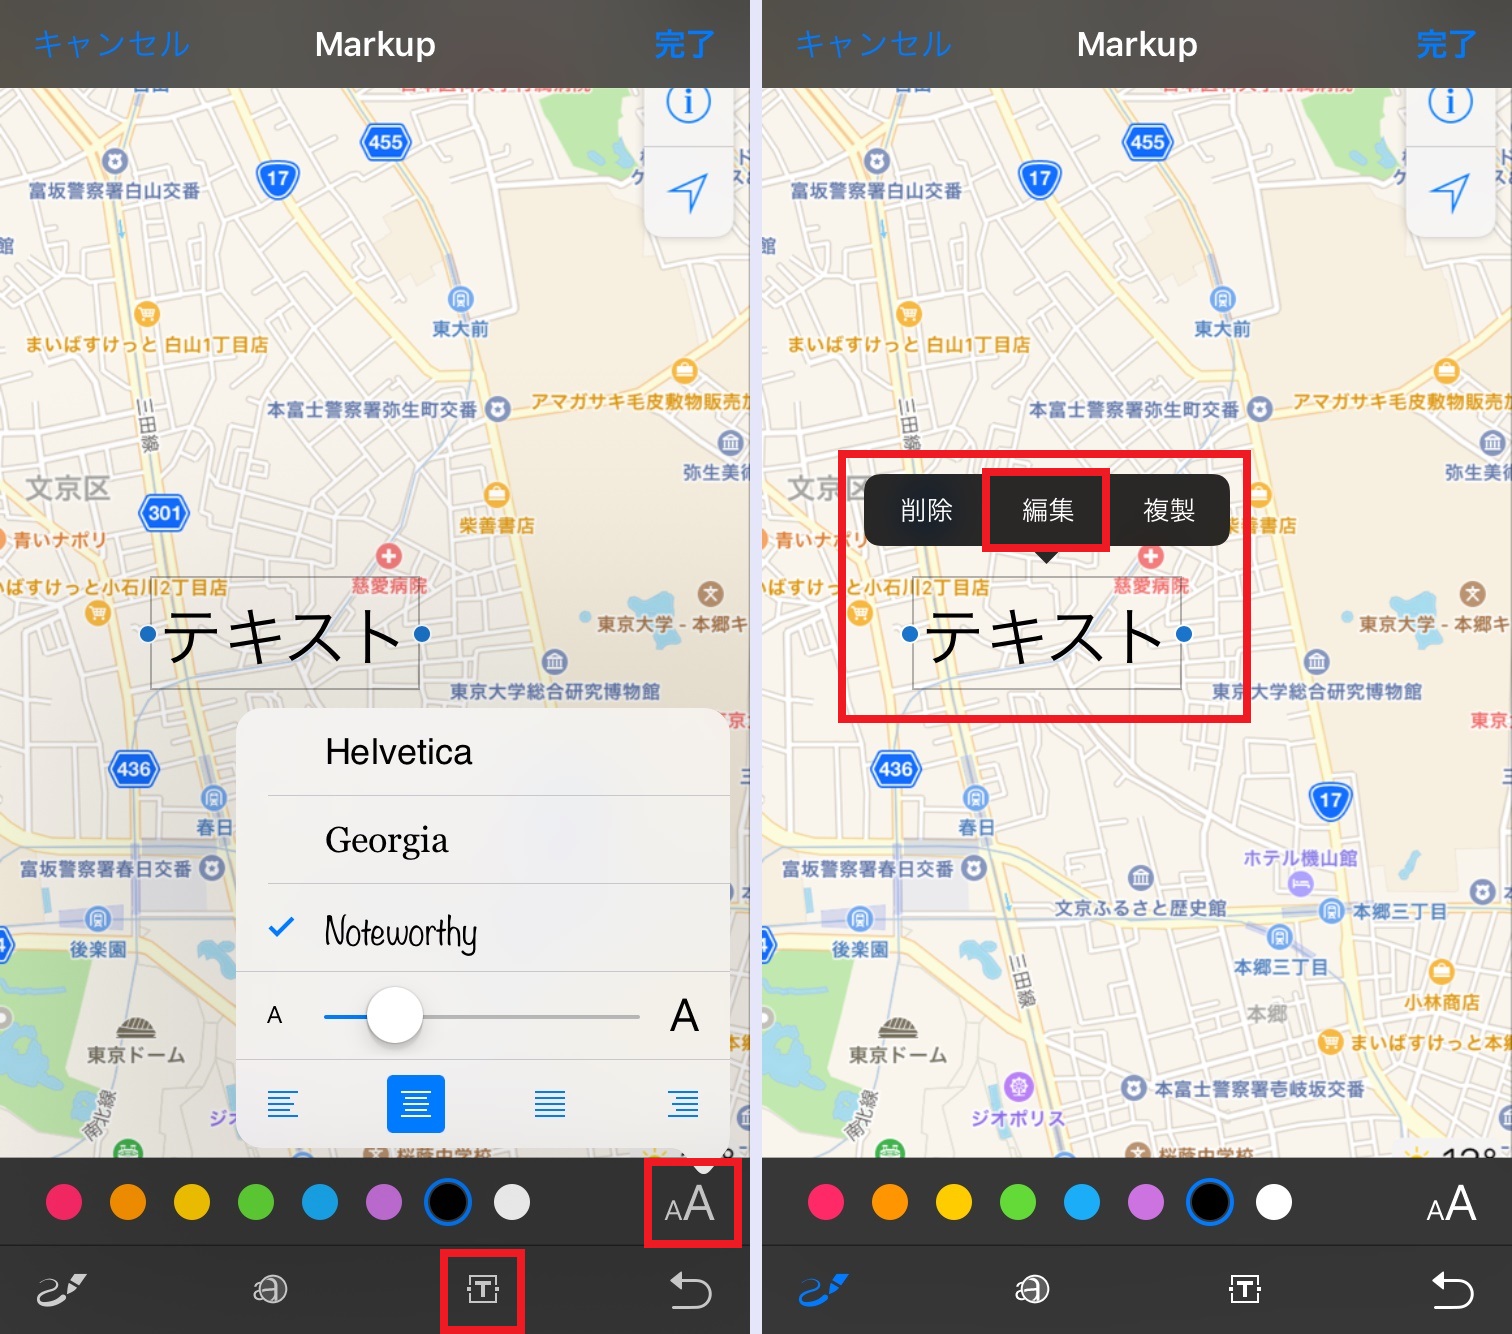 Iphone標準の写真編集機能 Markup ちょっとした加工はこれで十分 Iphone Tips Engadget 日本版